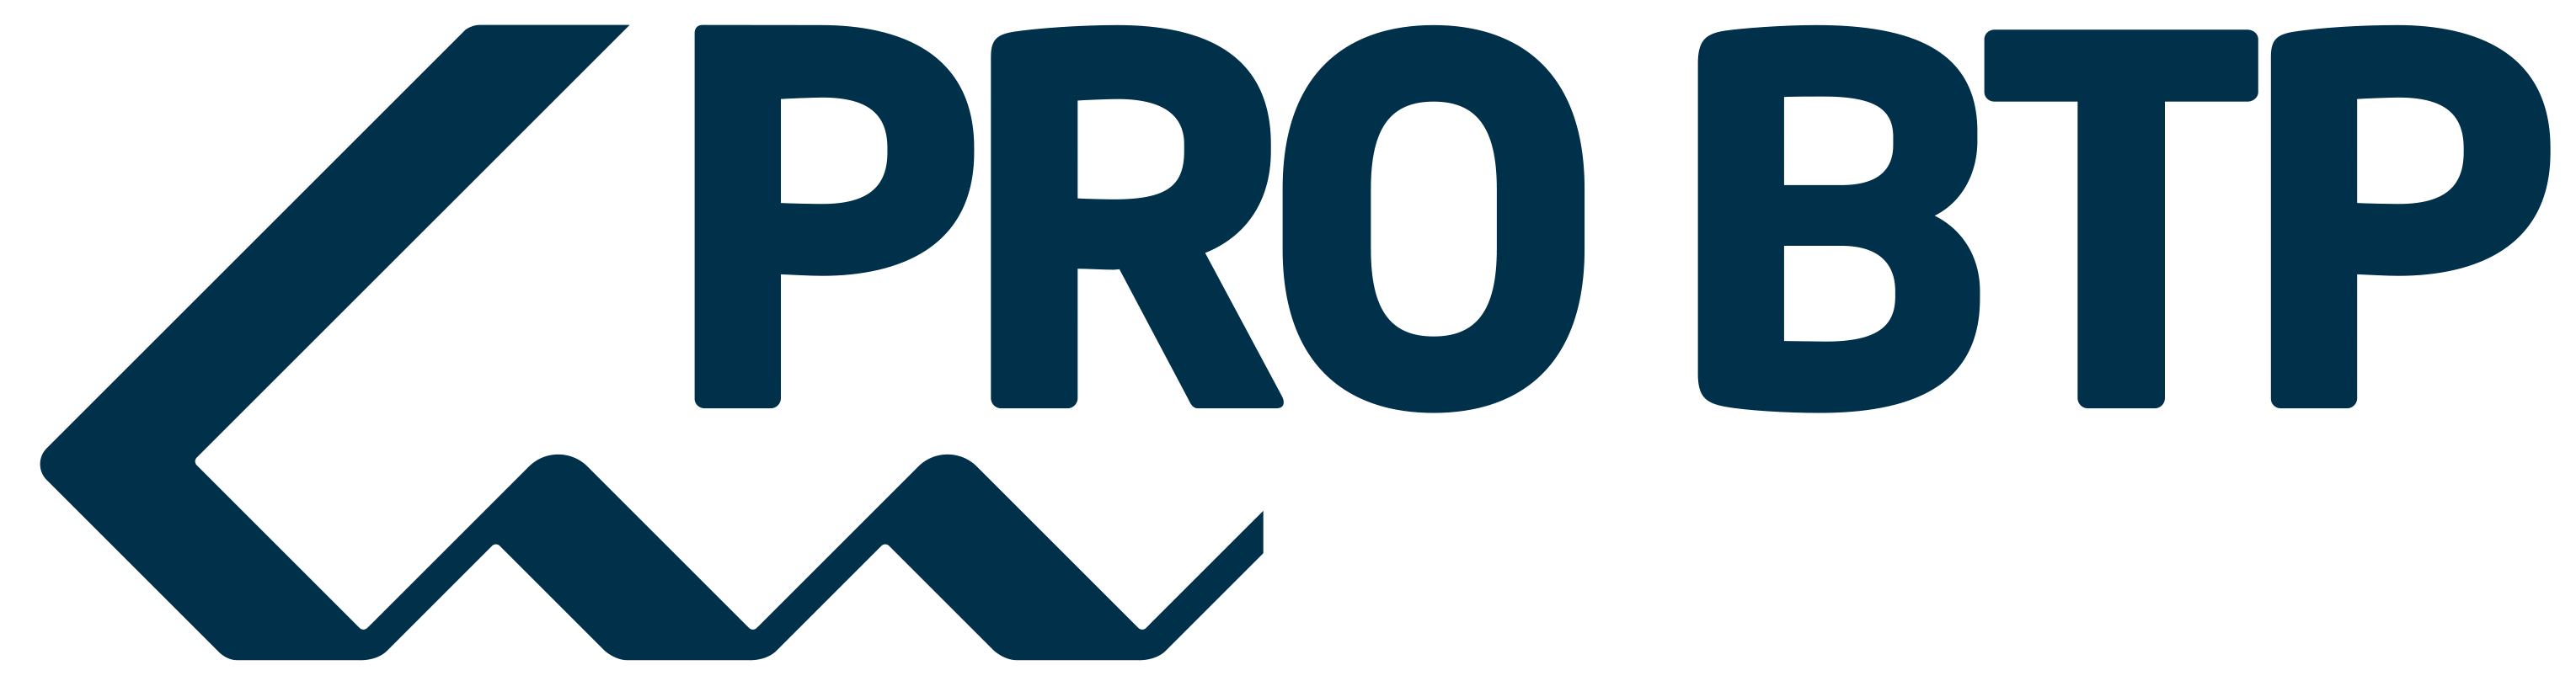 logo_pro_btp_rvb_300dpi.png